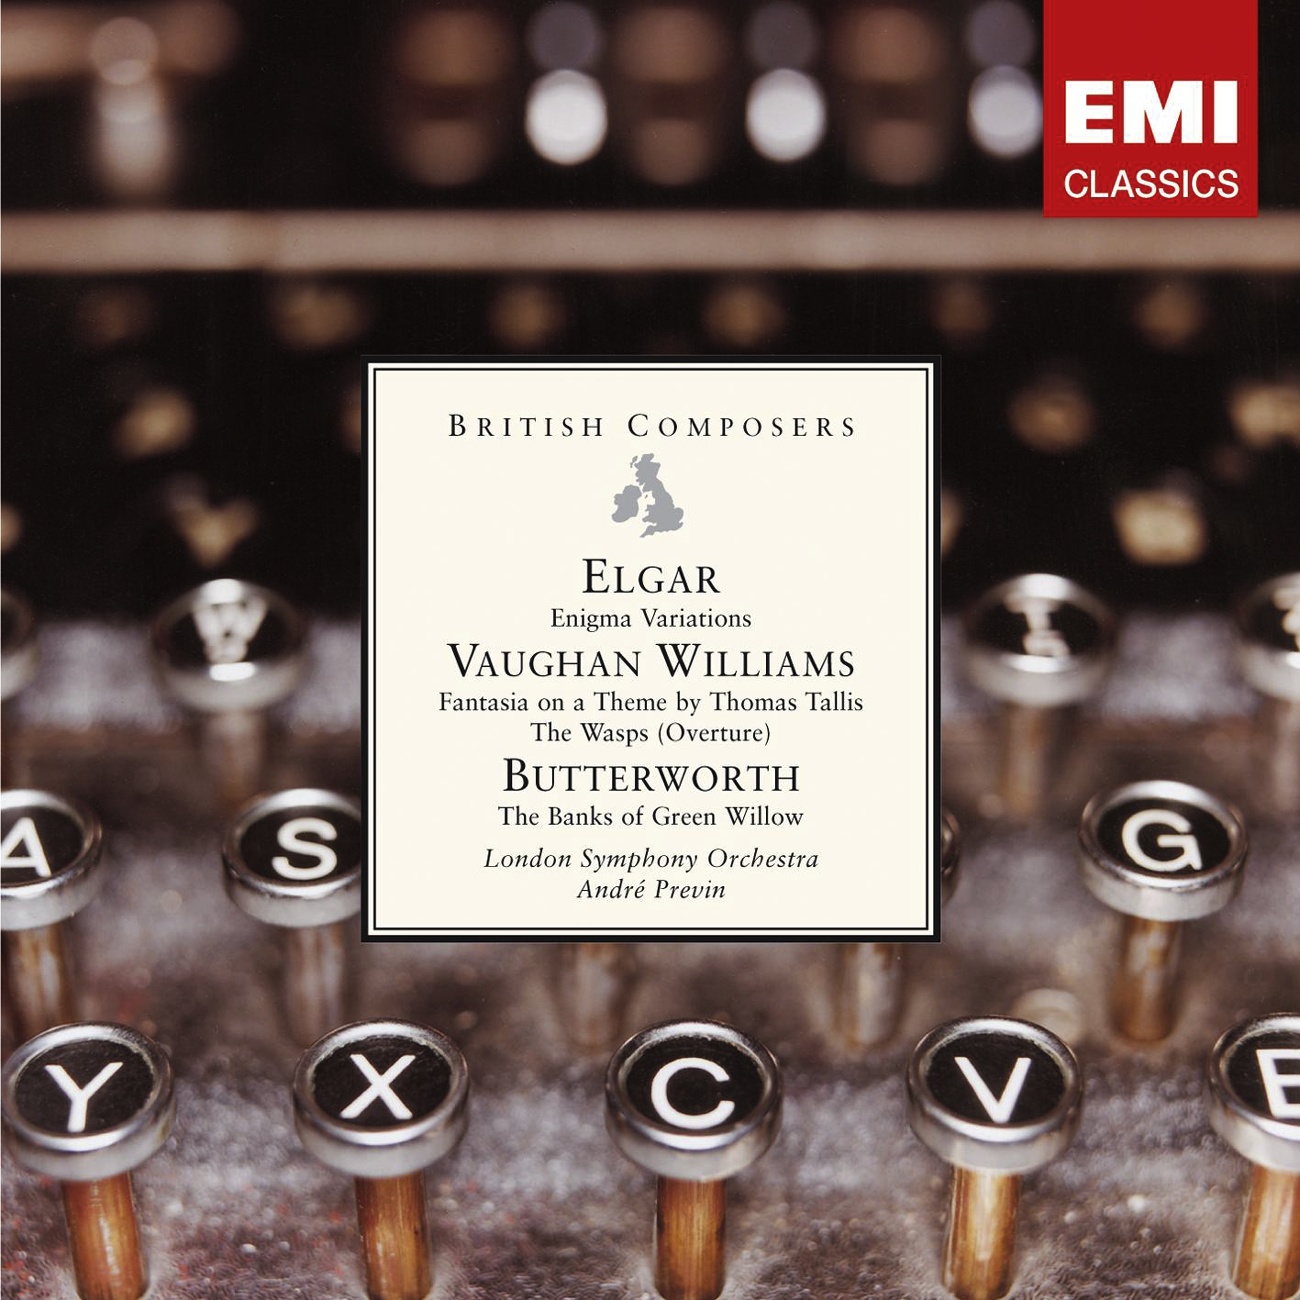 Variations on an Original Theme 'Enigma' Op. 36 (2007 Digital Remaster): XI.    G.R.S. (George Robertson Sinclair) (Allegro di m